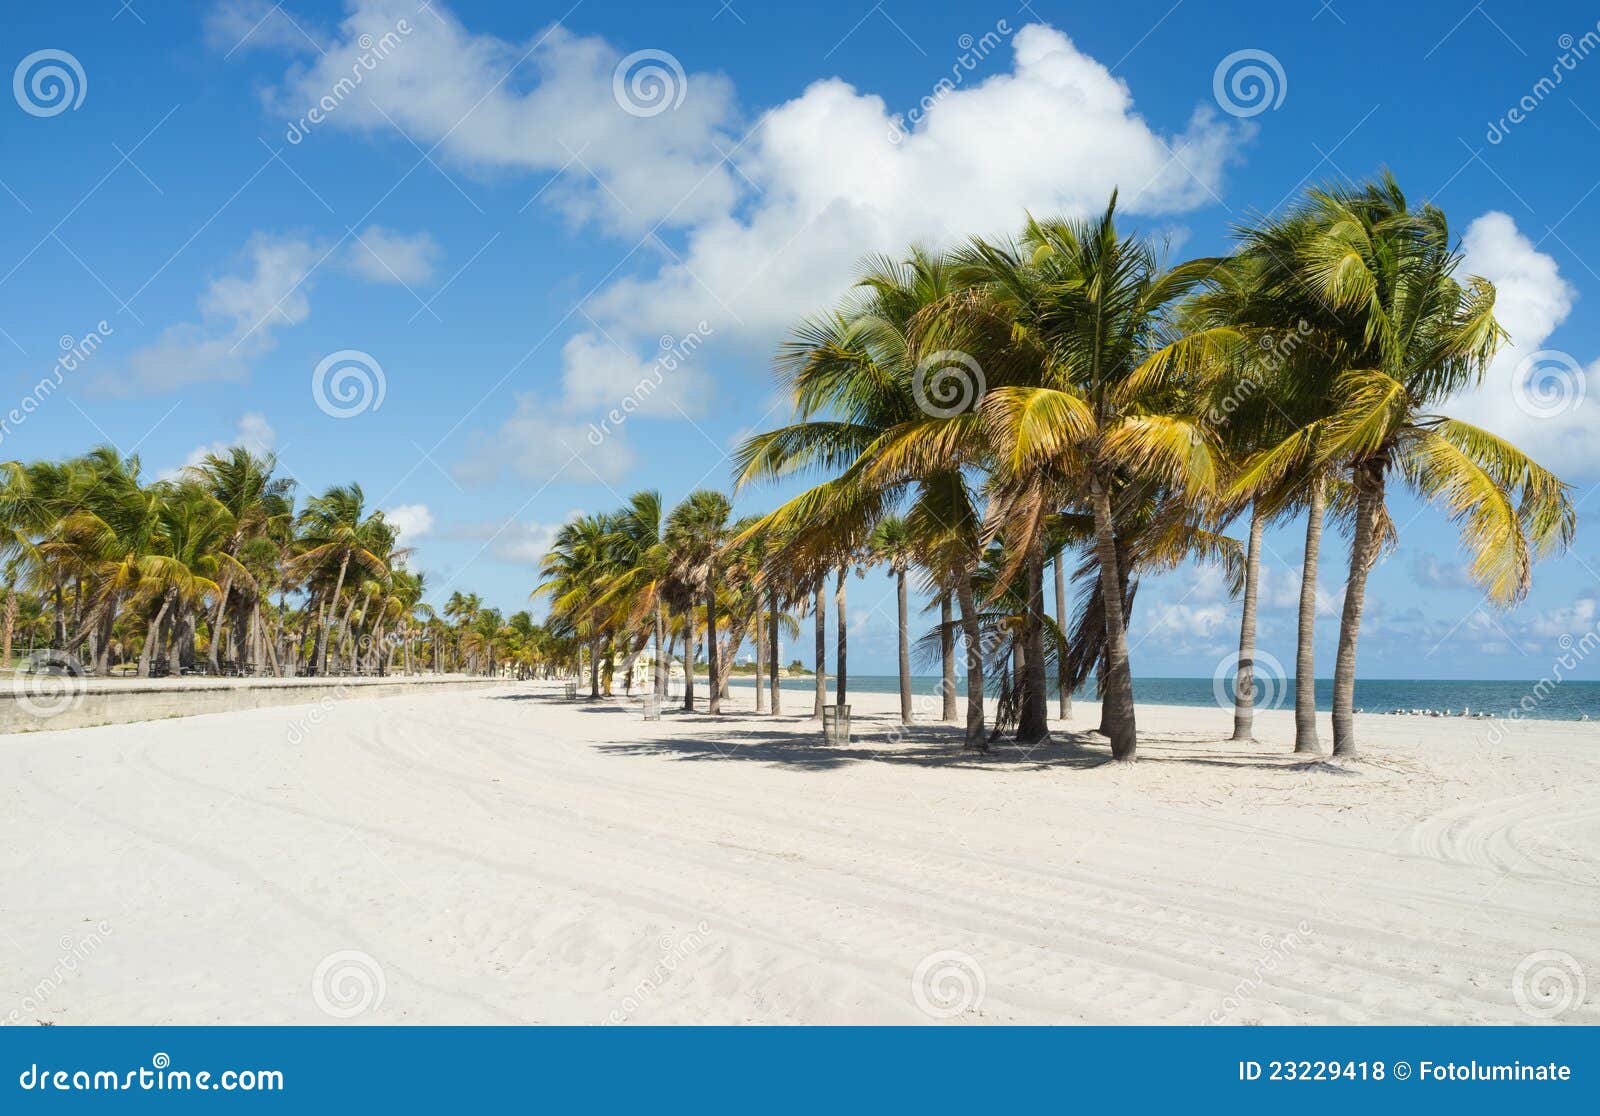 Royalty Free Stock Photos: Beautiful Miami Beach